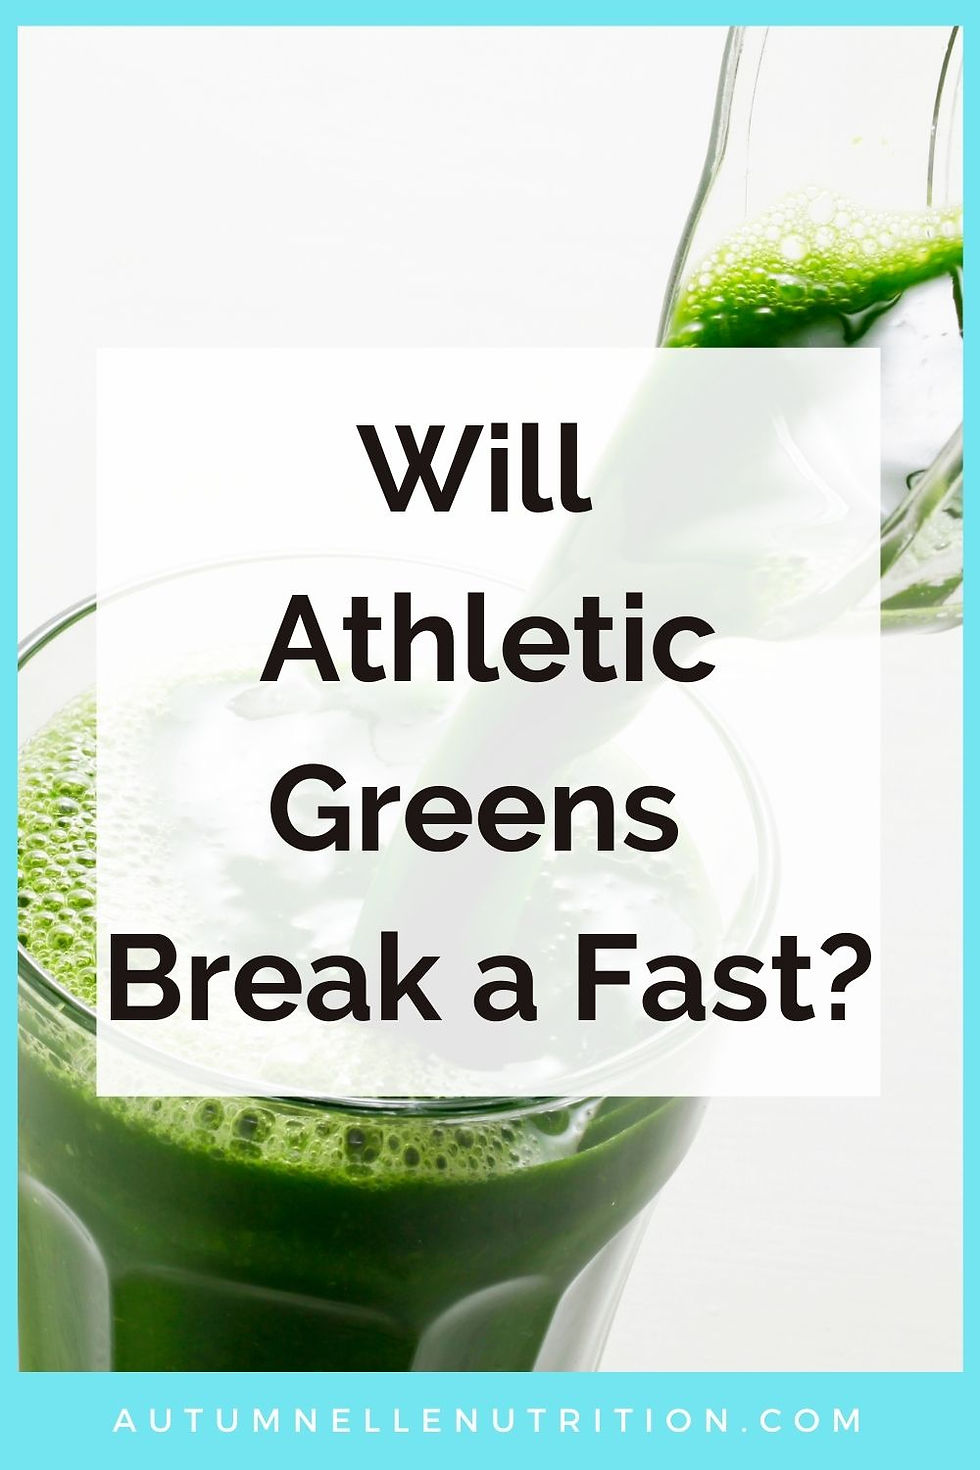 Do Athletic Greens Break a Fast?